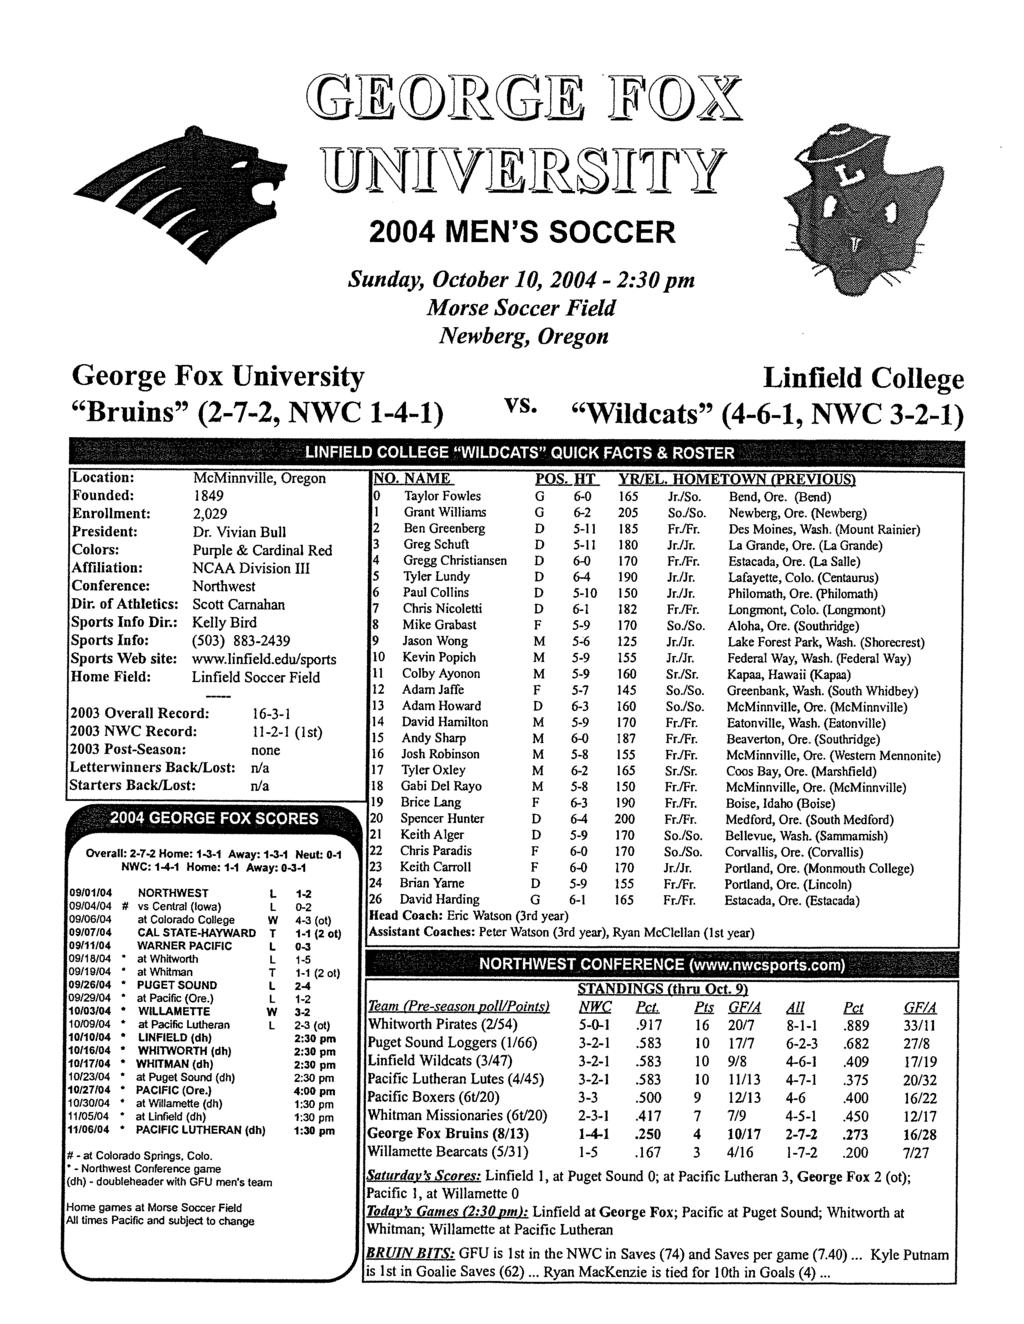 George Fox University "Bruins" (-7-, NWC --) CG JE CD) ill. CG JE.JFCD) J! UJNJIVJEffi~JiilW MEN'S SOCCER Sunday, October,-: pm Morse Soccer Field Newberg, Oregon vs.